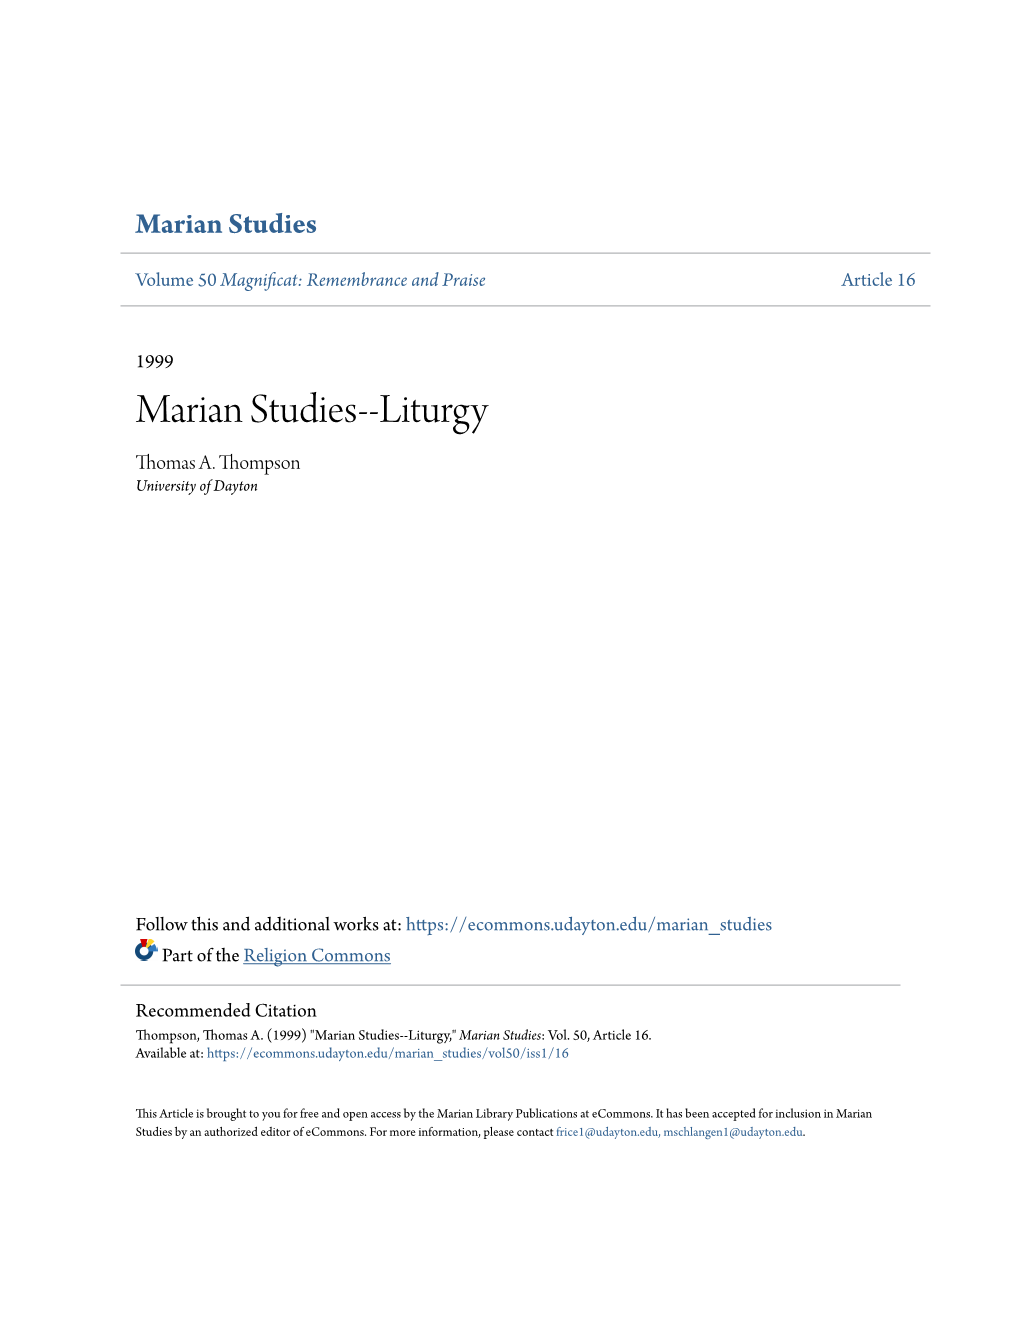 Marian Studies--Liturgy Thomas A